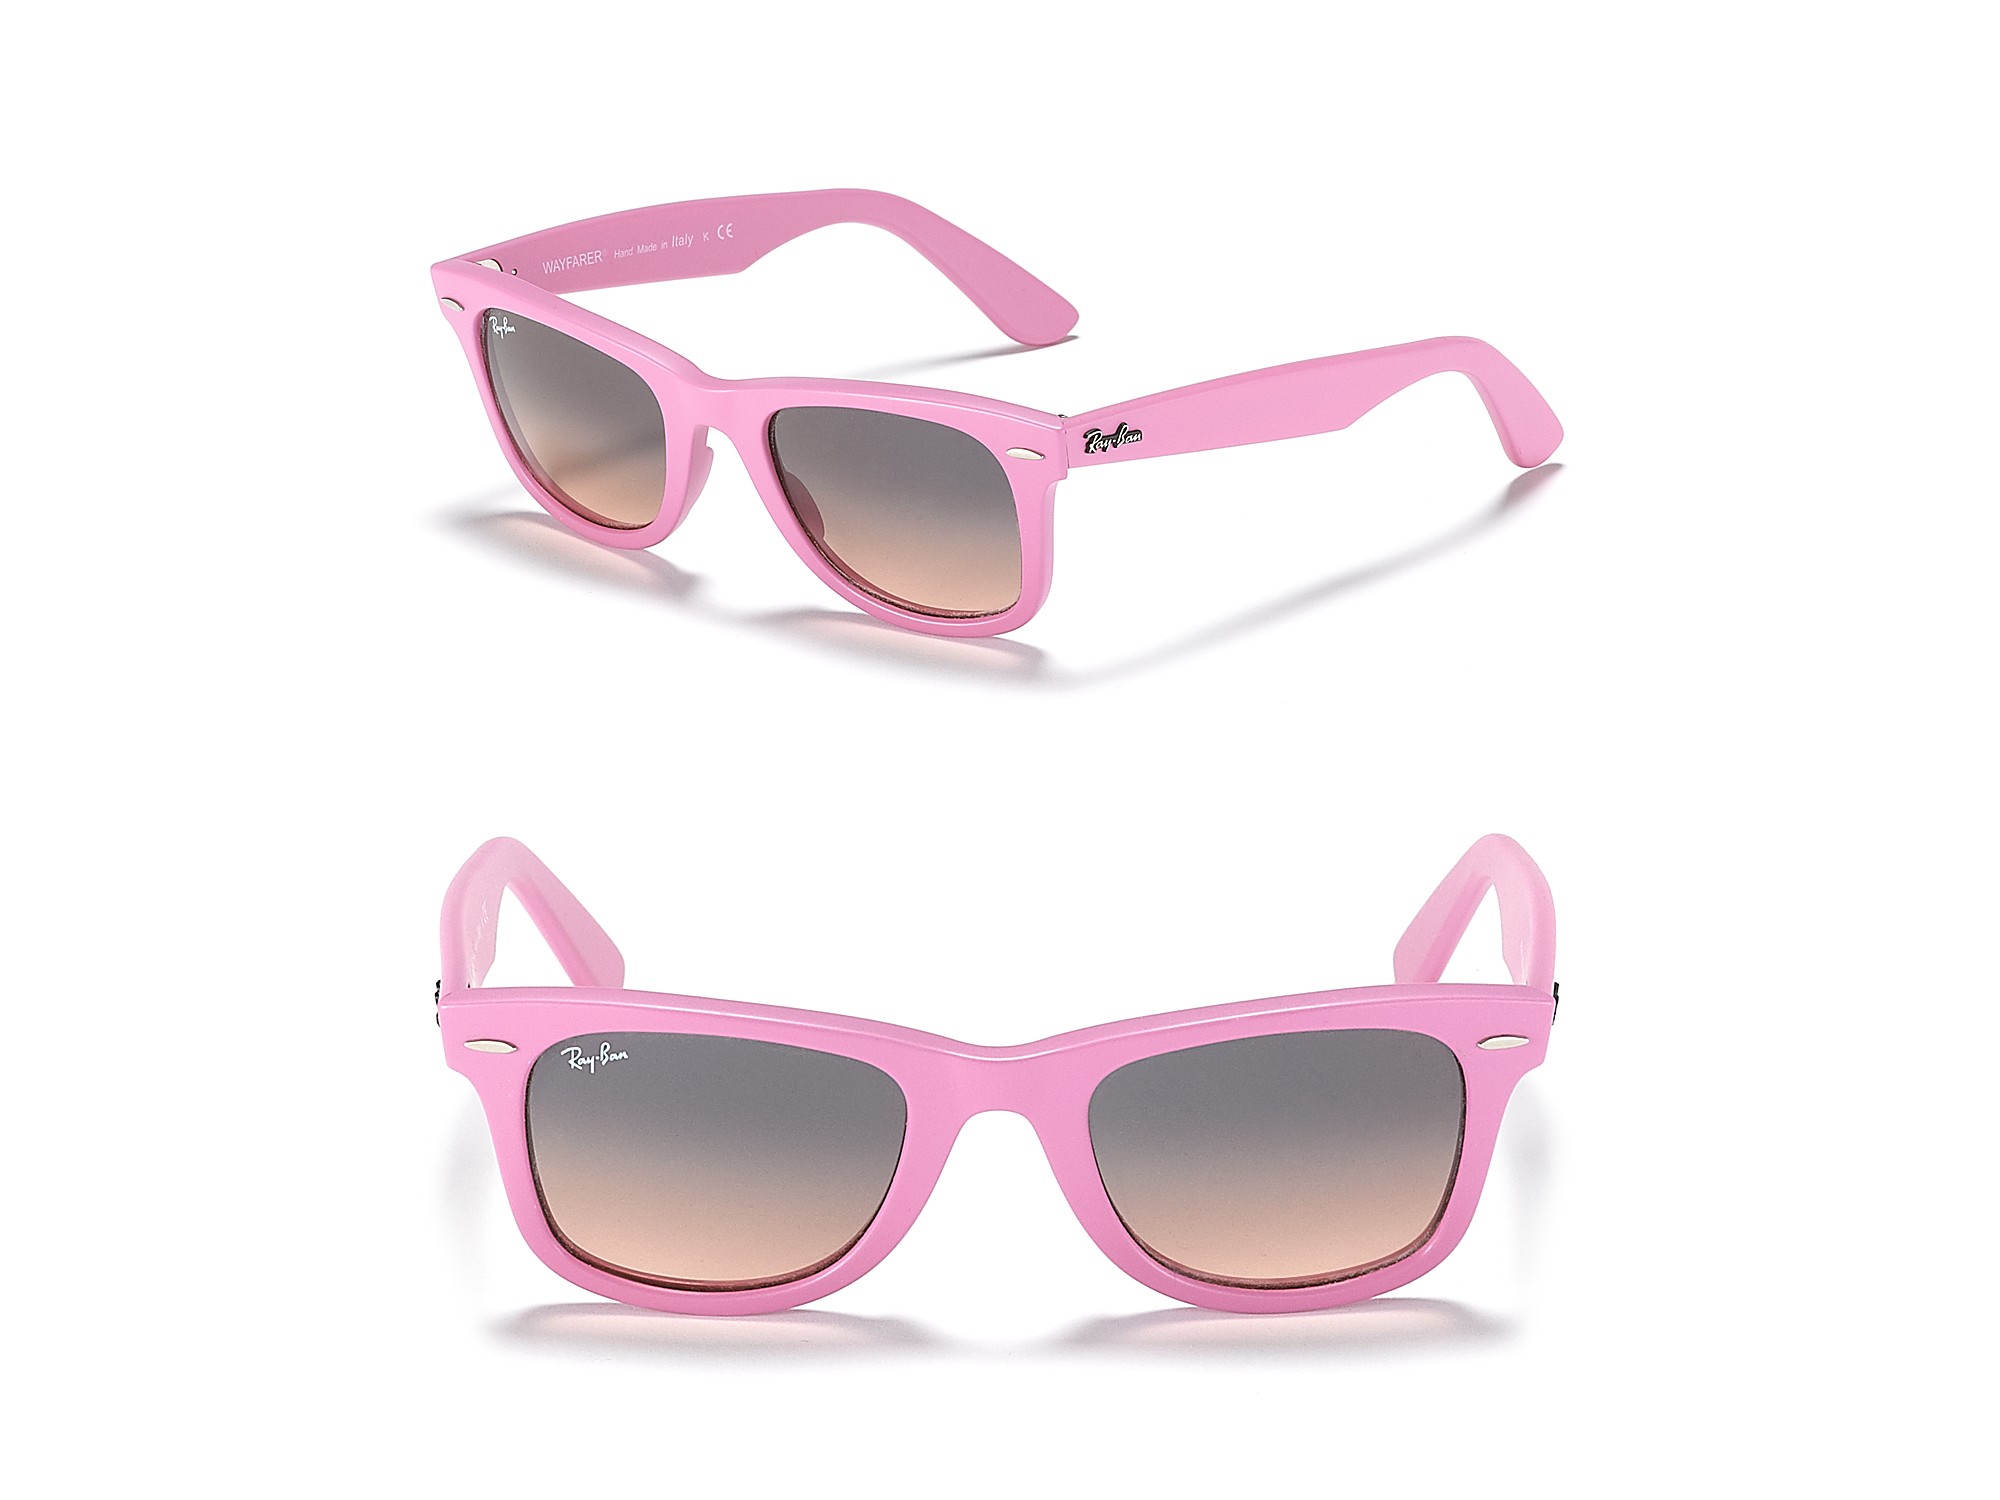 Ray Ban Classic Wayfarer Sunglasses In Pink Lyst 